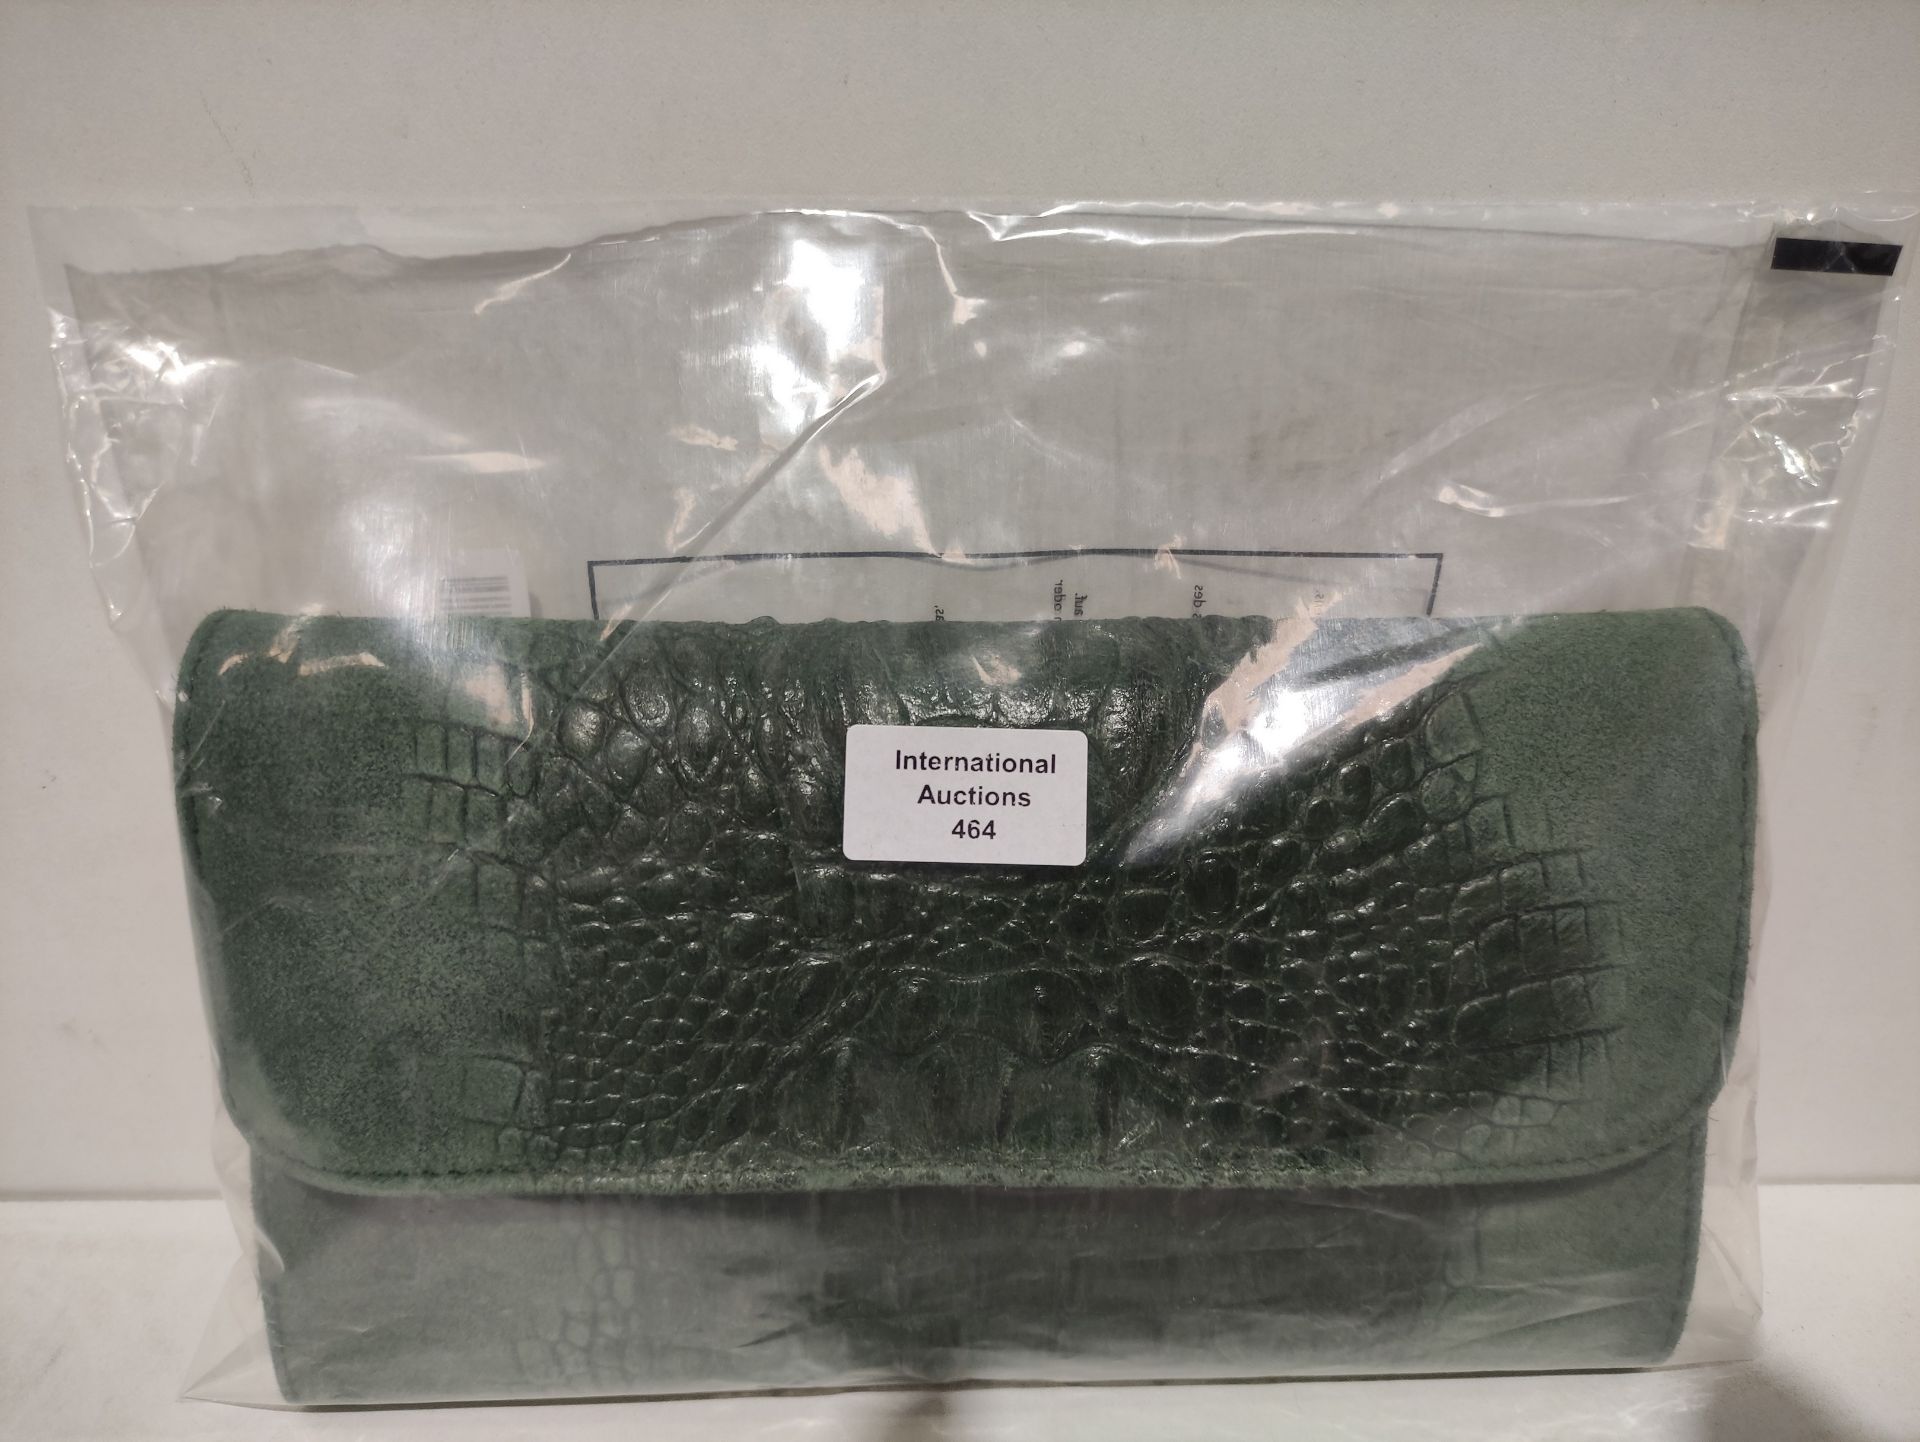 RRP £25.49 Girly Handbags Croc Suede Clutch Bag Italian Leather (Dark Green) - Image 2 of 2